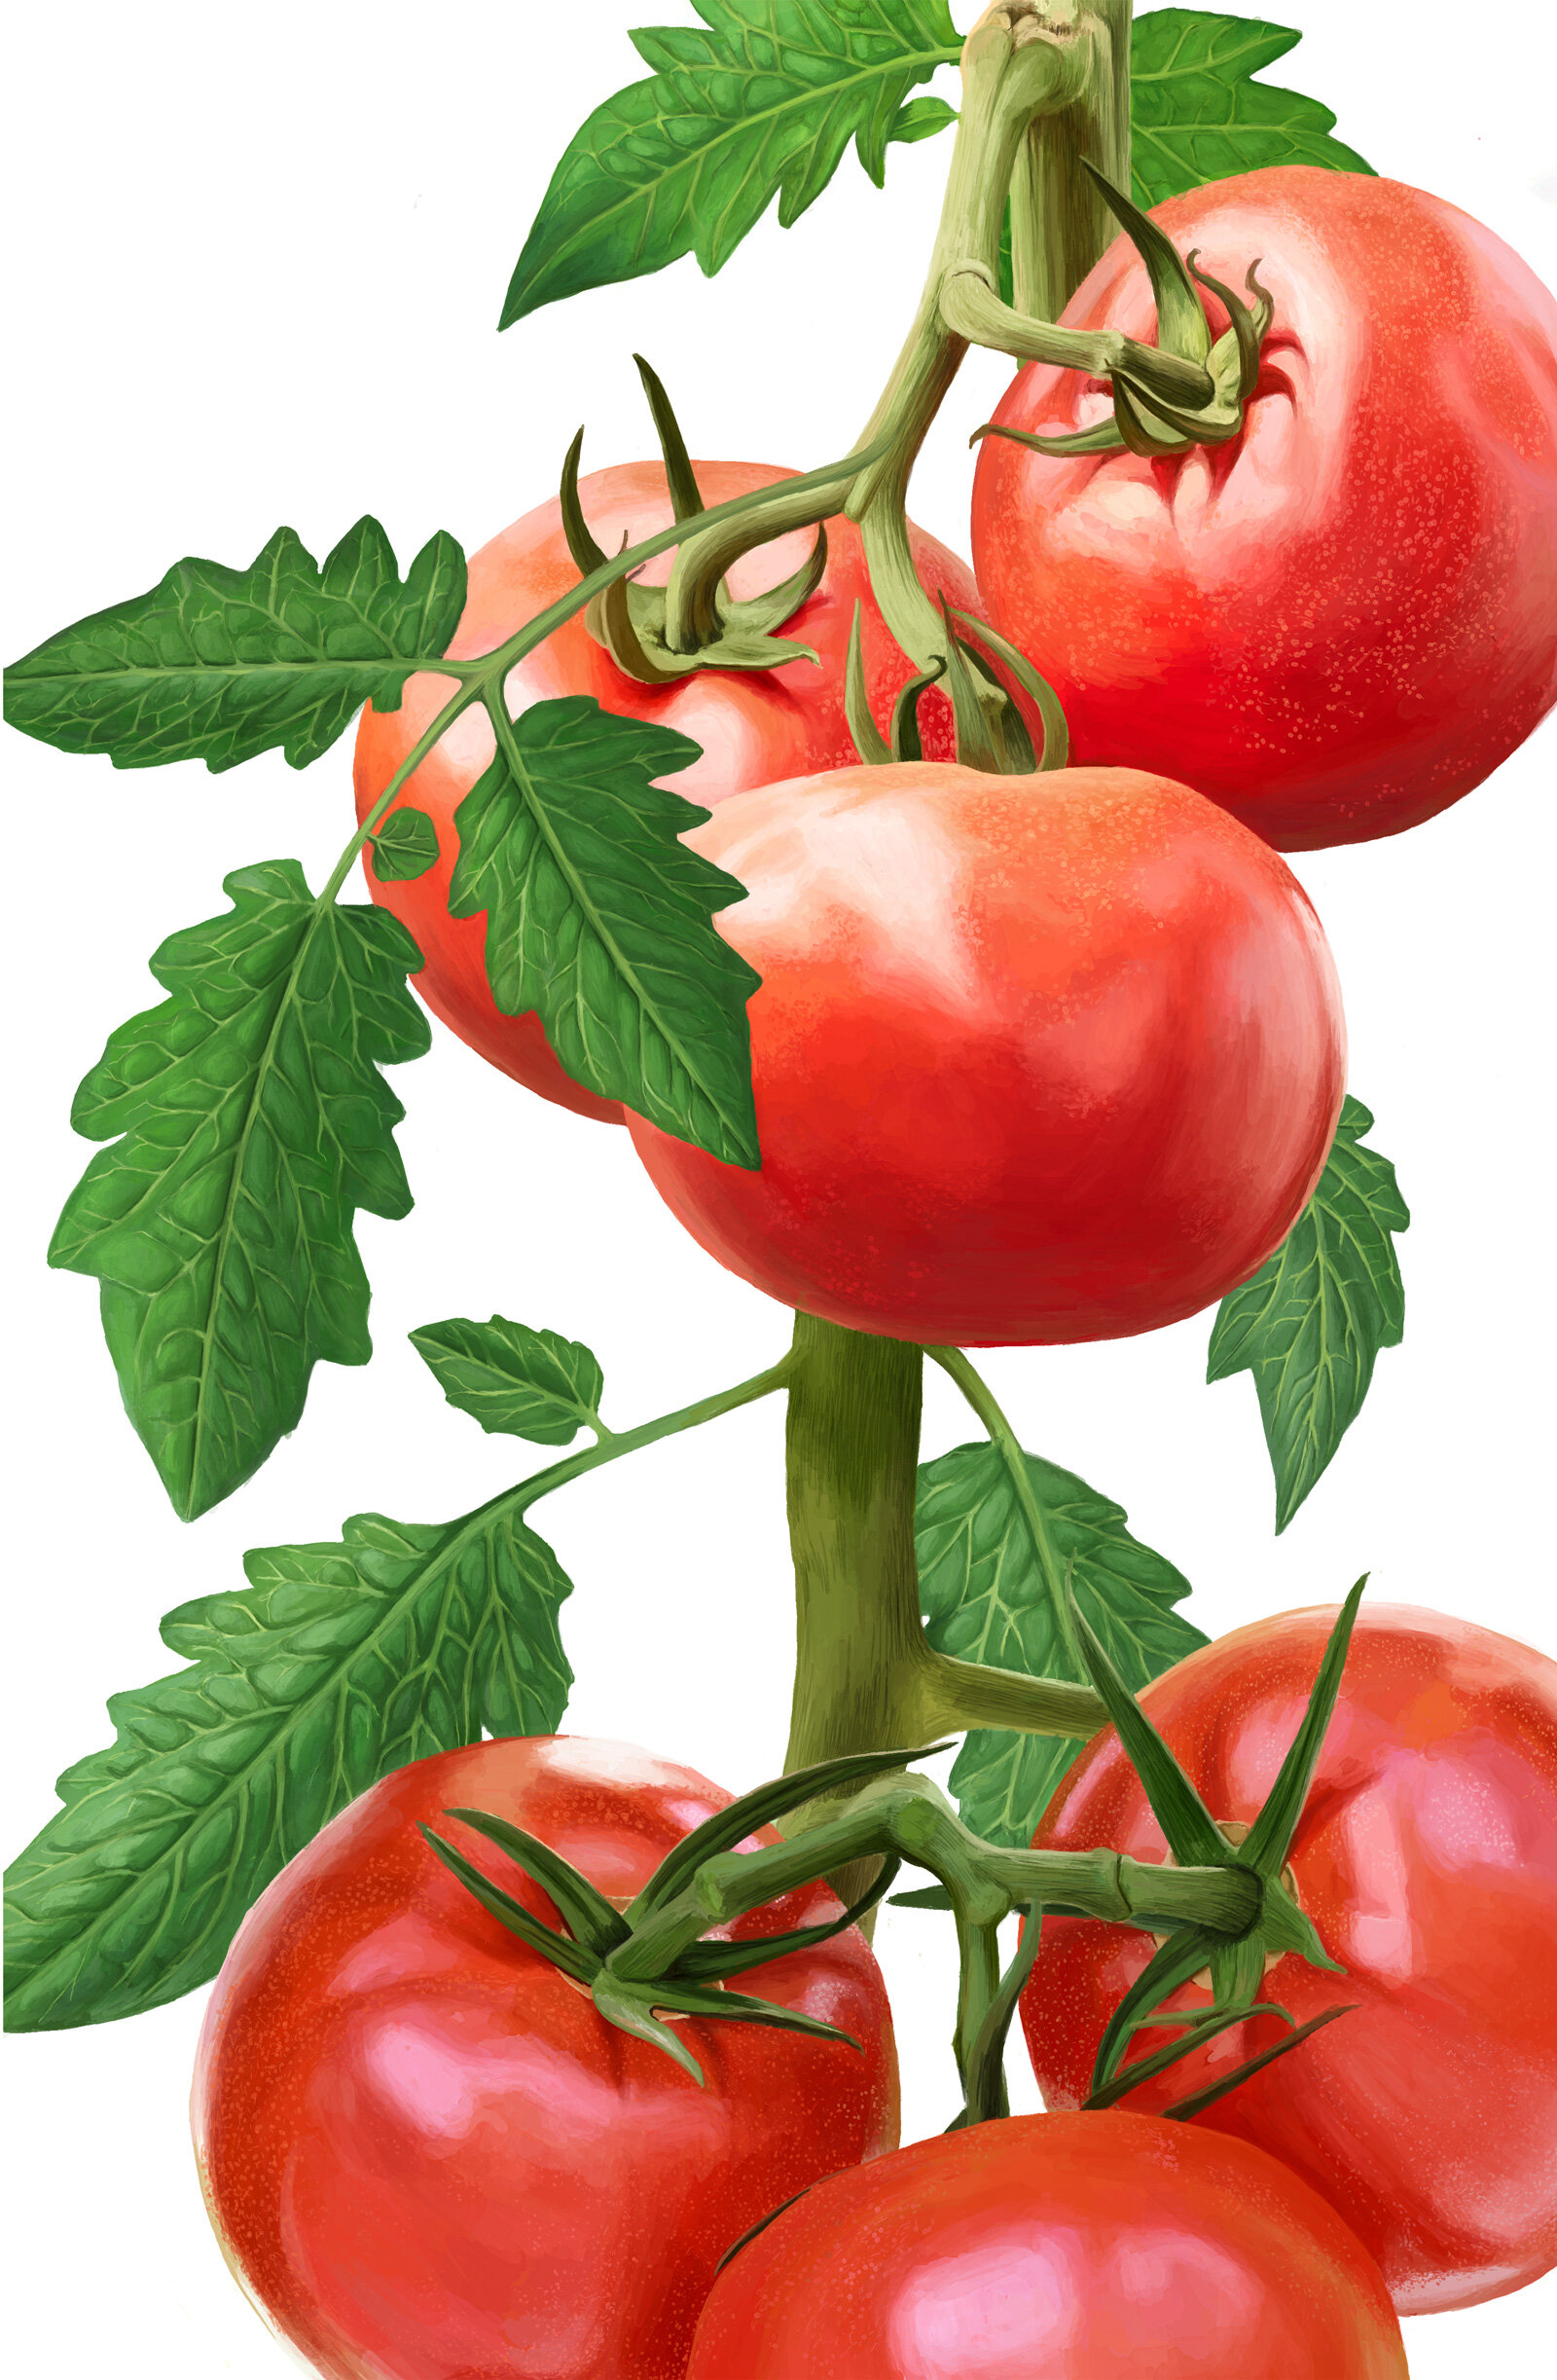 oculus-illustration-pflanzenillustration-hauert-verpackungsdesign-tomate